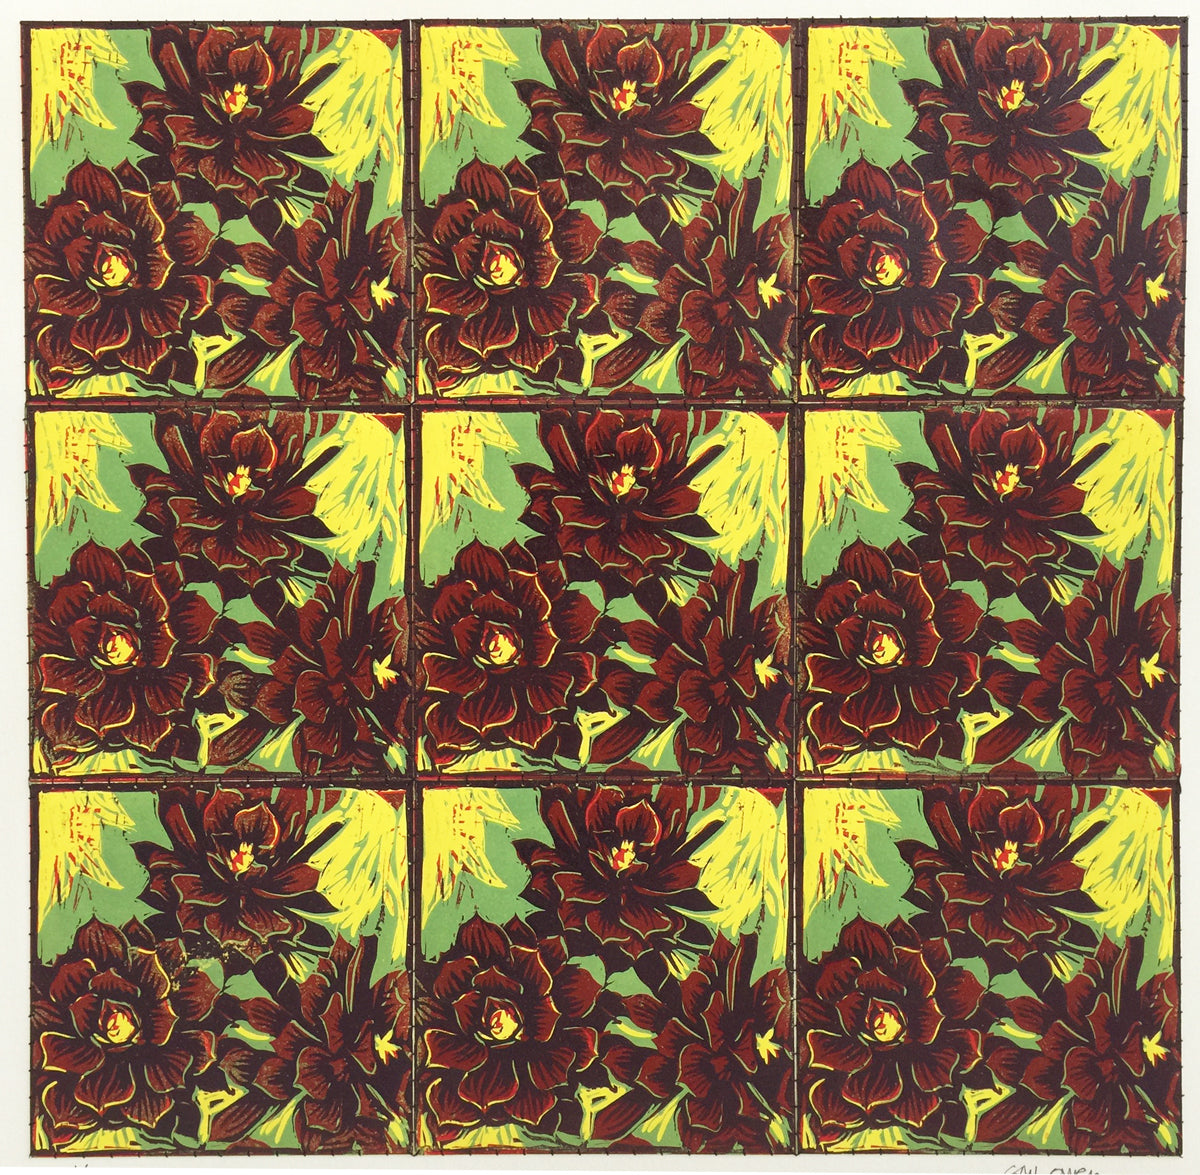 32. Bronze Succulent (9 panel)